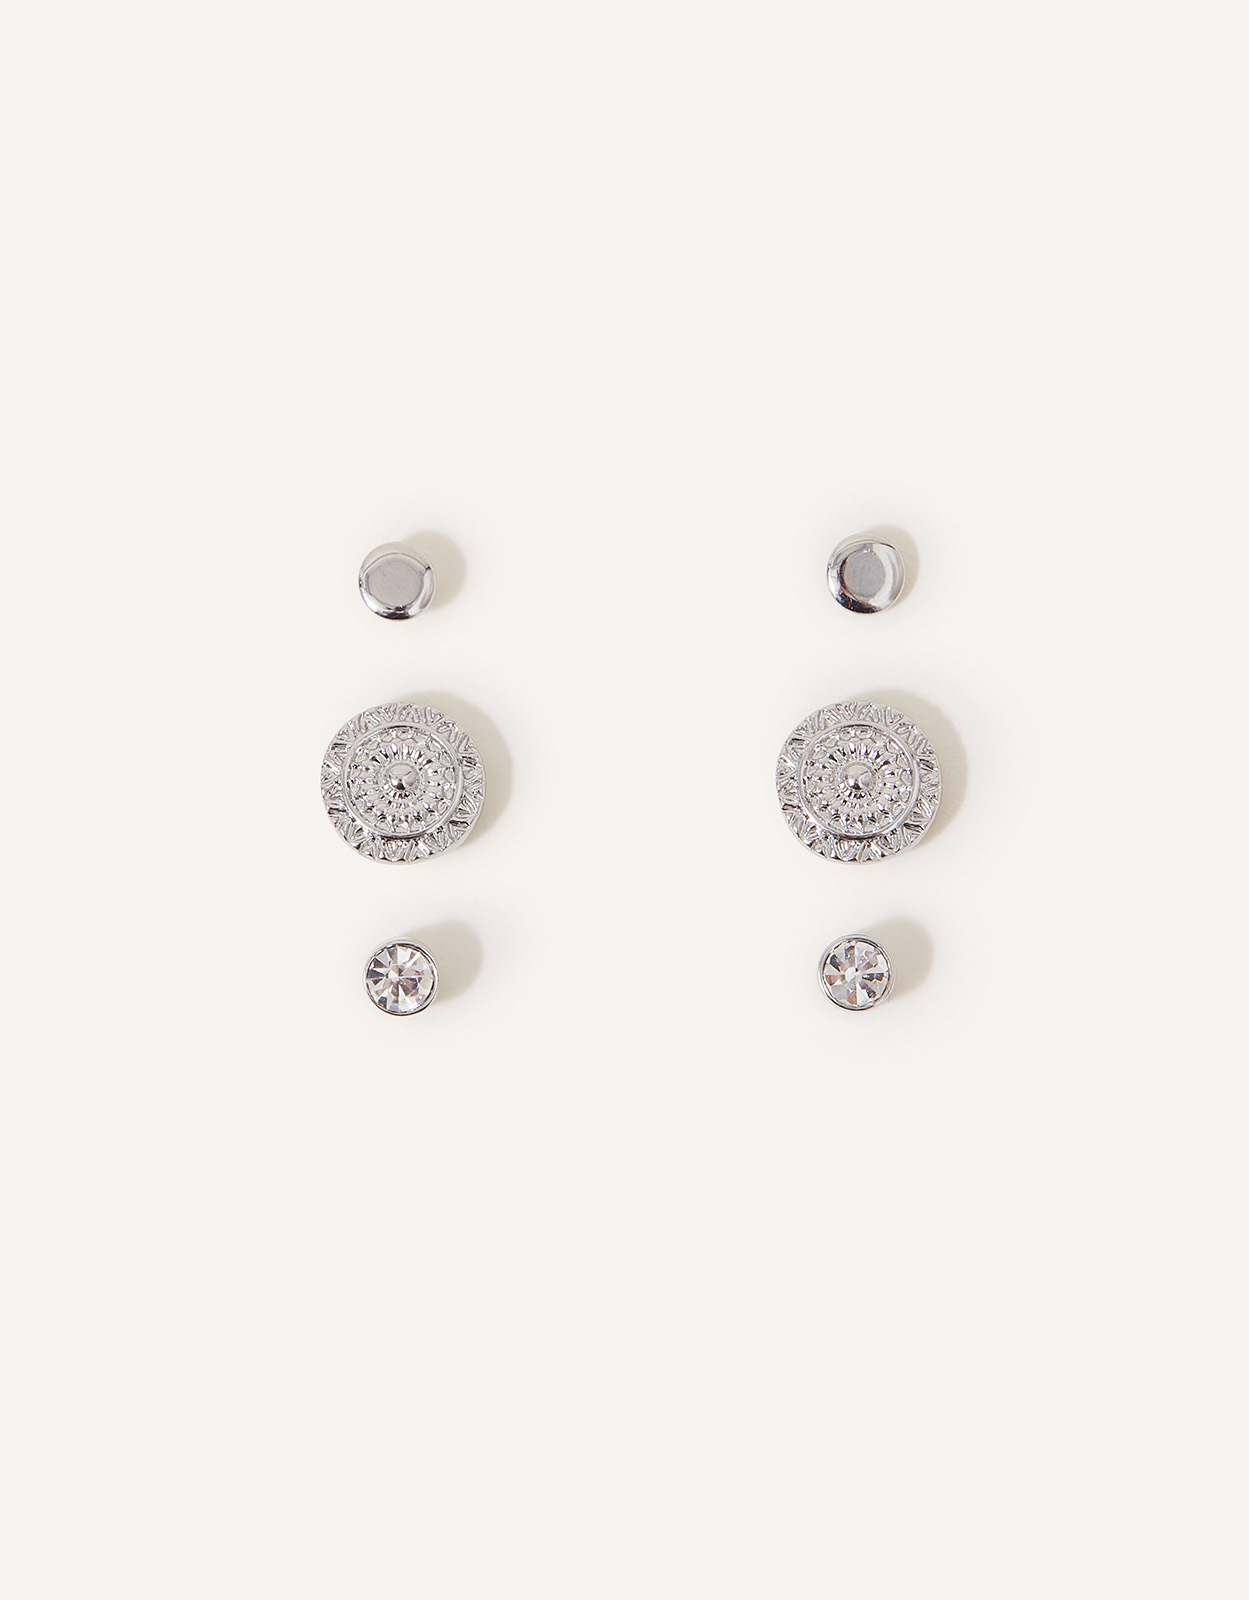 Accessorize Women's Textured Discs Stud Earring Set of Three, Size: 1cm